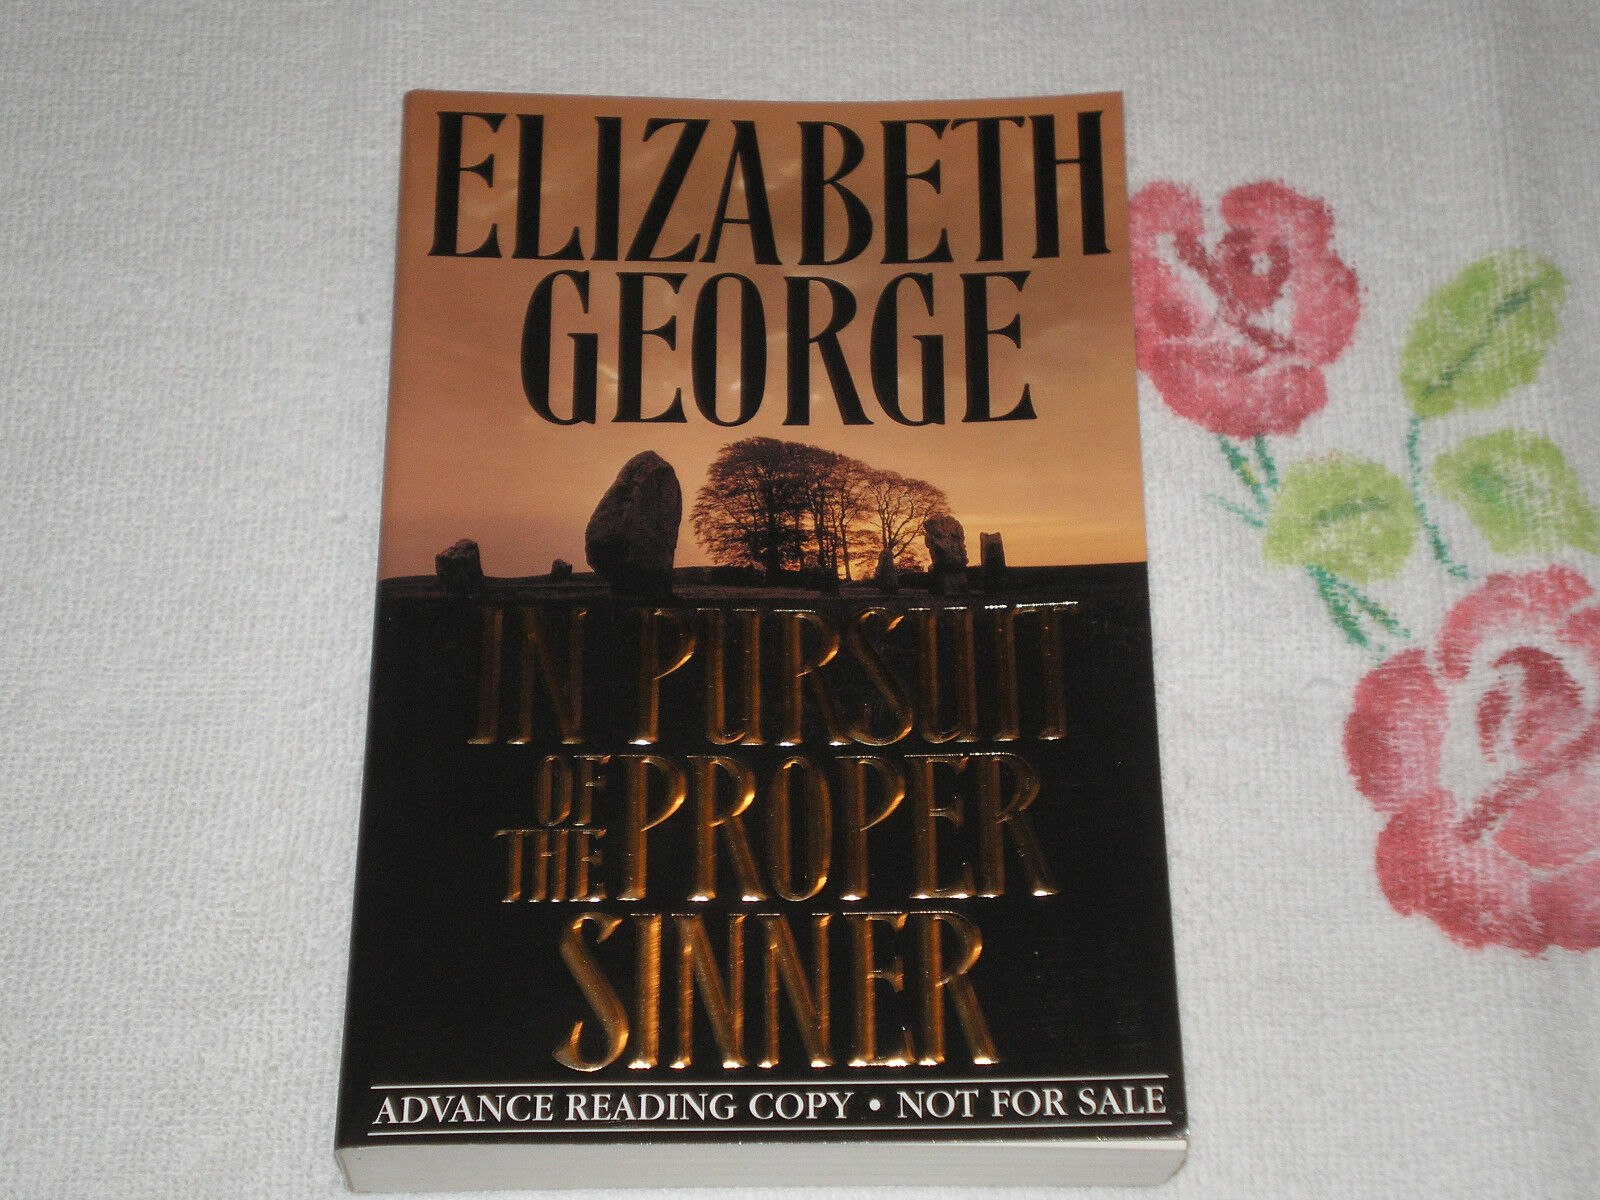 IN PURSUIT OF THE PROPER SINNER by ELIZABETH GEORGE   *SIGNED*  -ARC-  JA